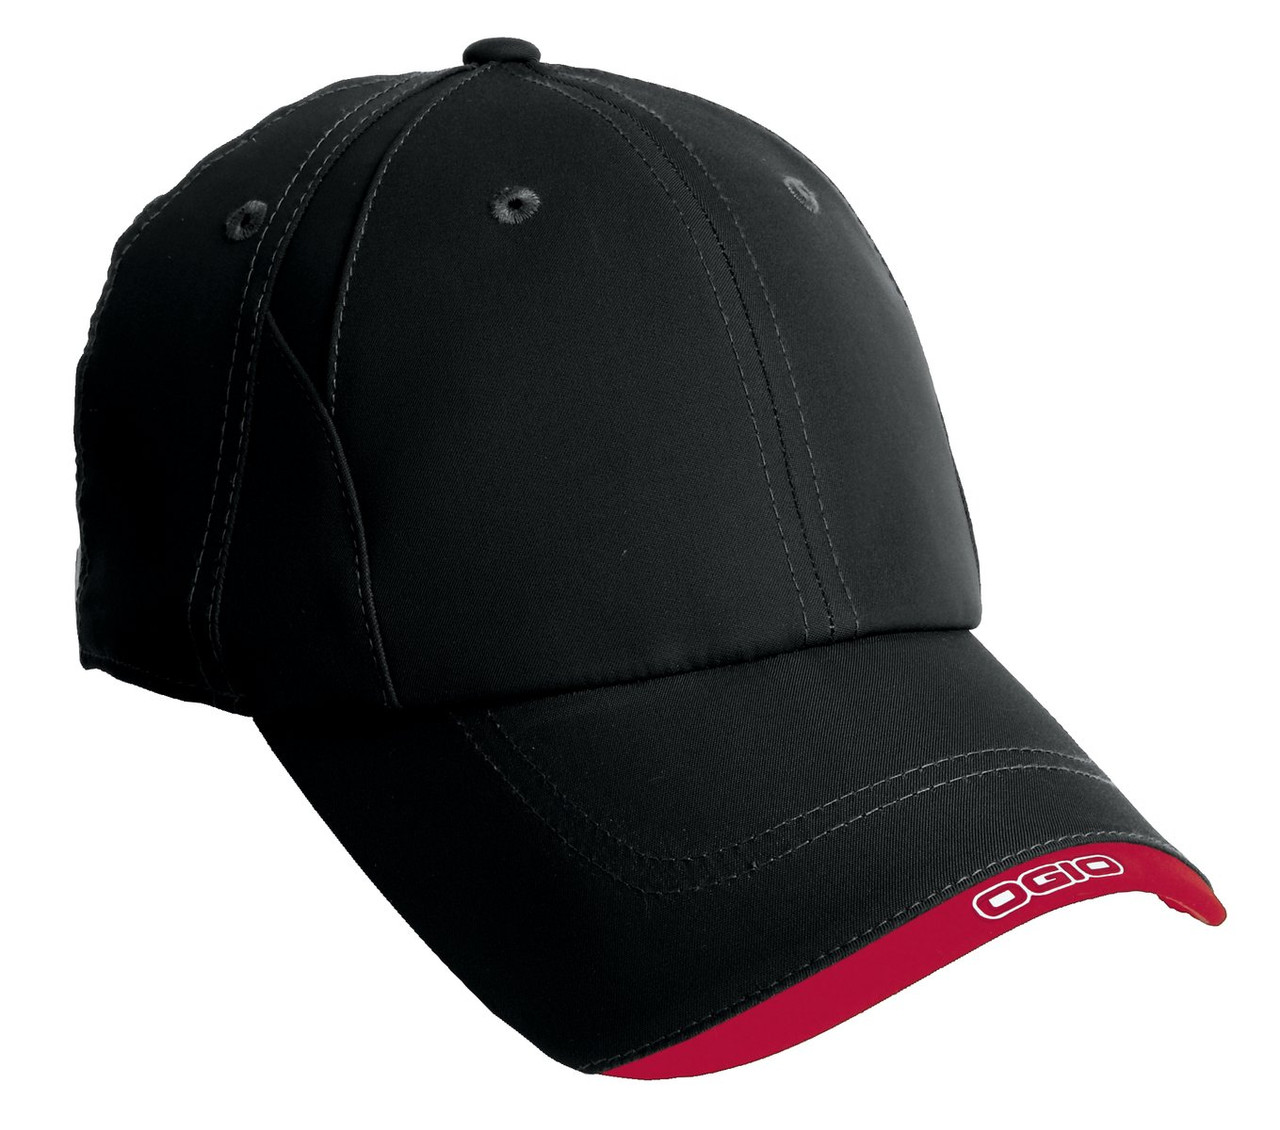 OGIO® - X-Over Cap. OG600 Blacktop/ Chili Red